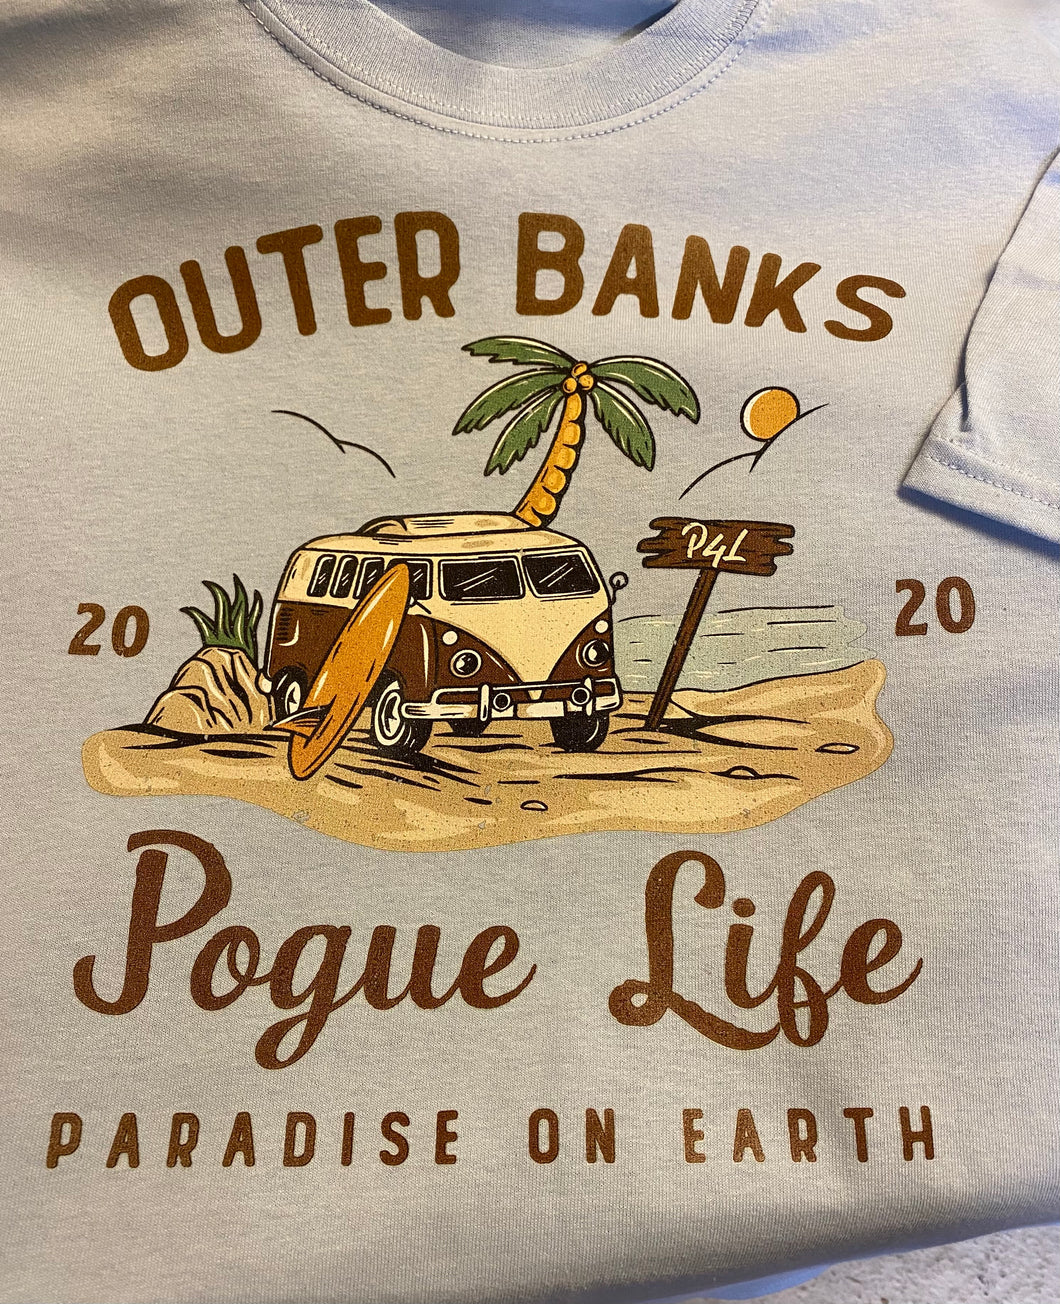 Outer Banks Paradise on Earth - Pogue Life Shirt